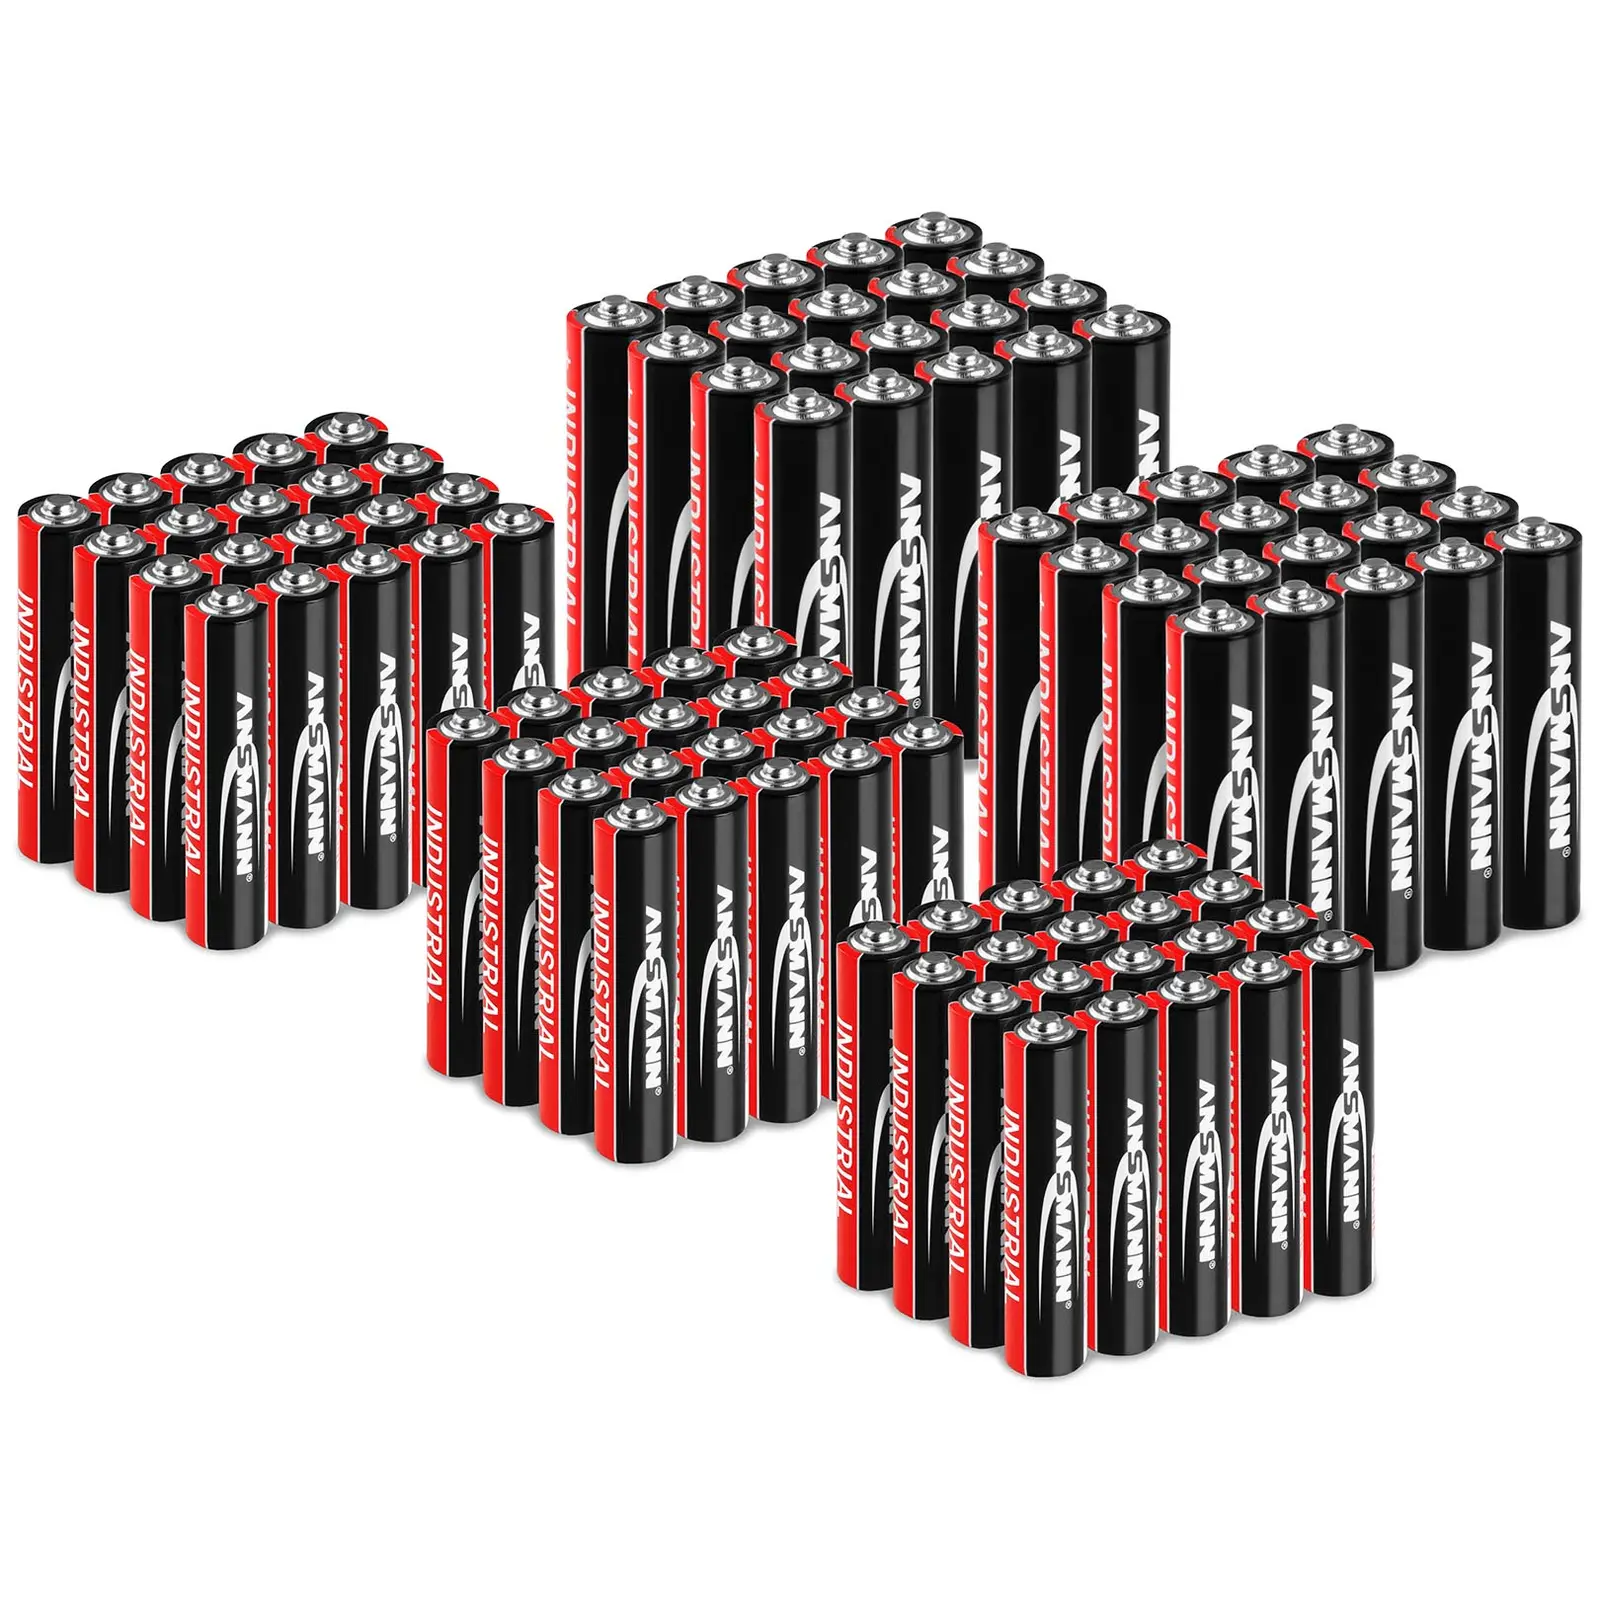 100 x Micro/Mignon Mix (60 x AAA LR03 + 40 x AA LR6) - Ansmann INDUSTRIAL Alkaline Batteries - 1.5 V